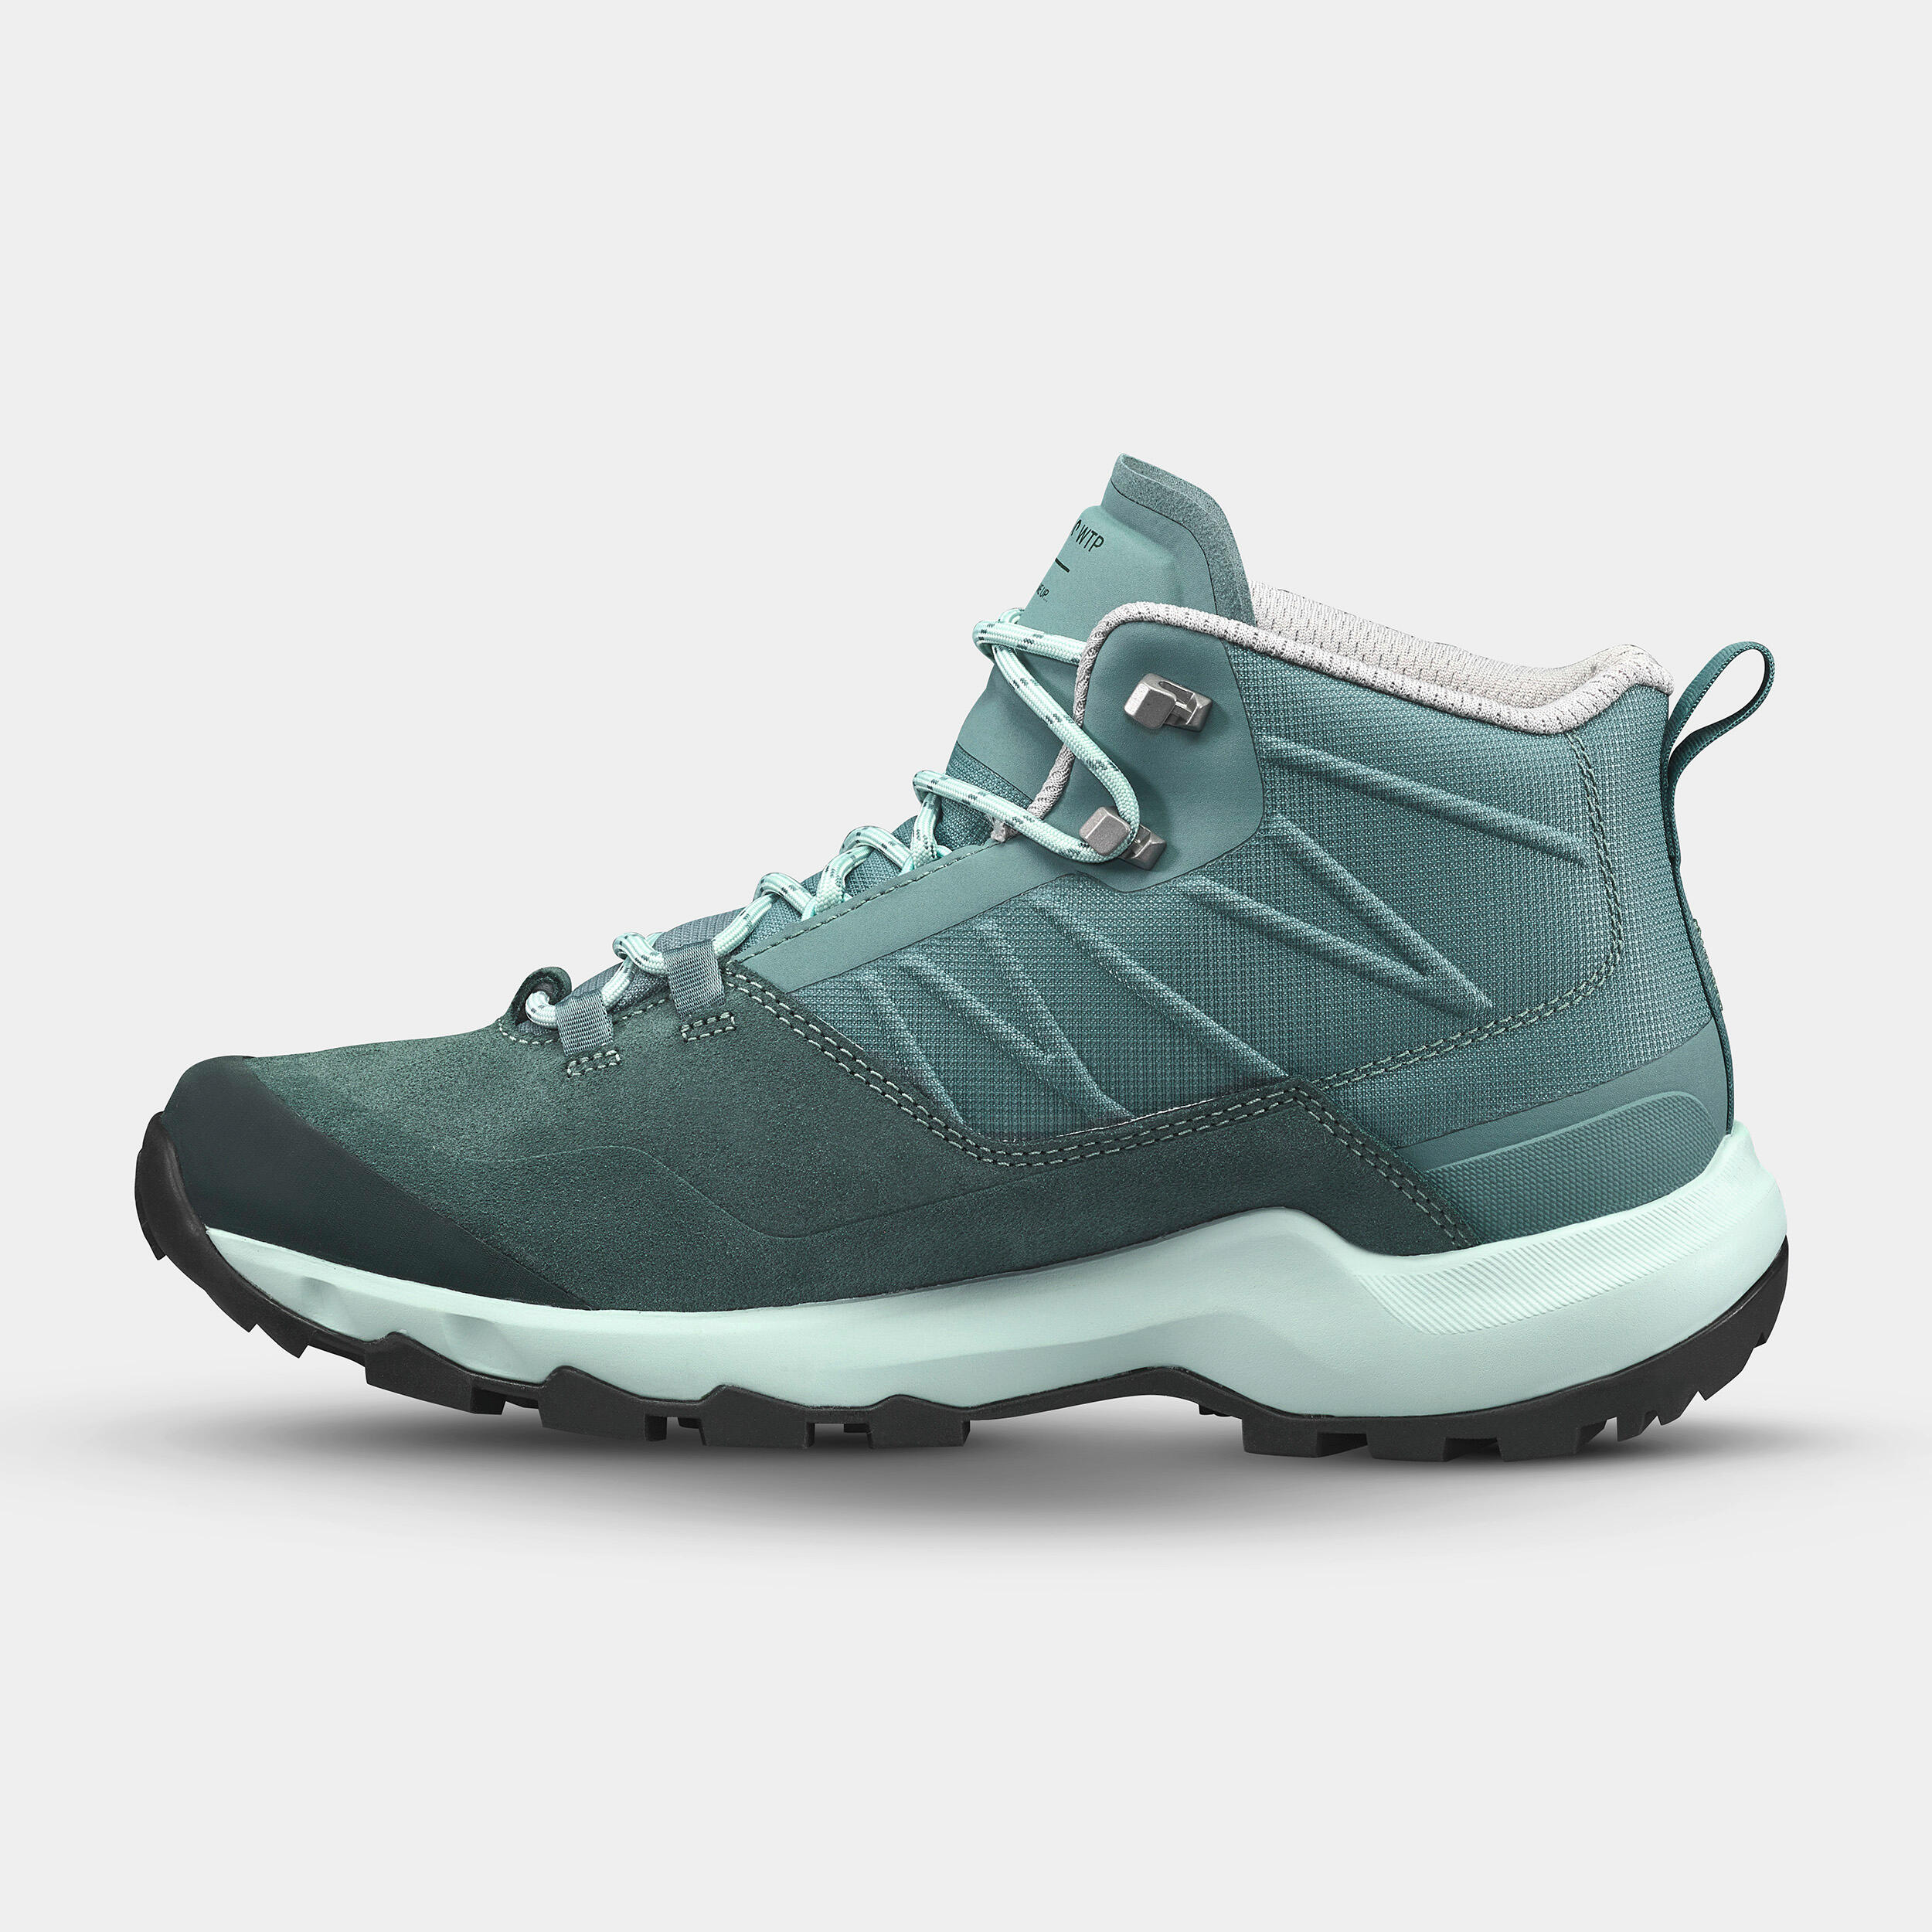 Women’s Waterproof Hiking Boots - MH 500 Green - QUECHUA